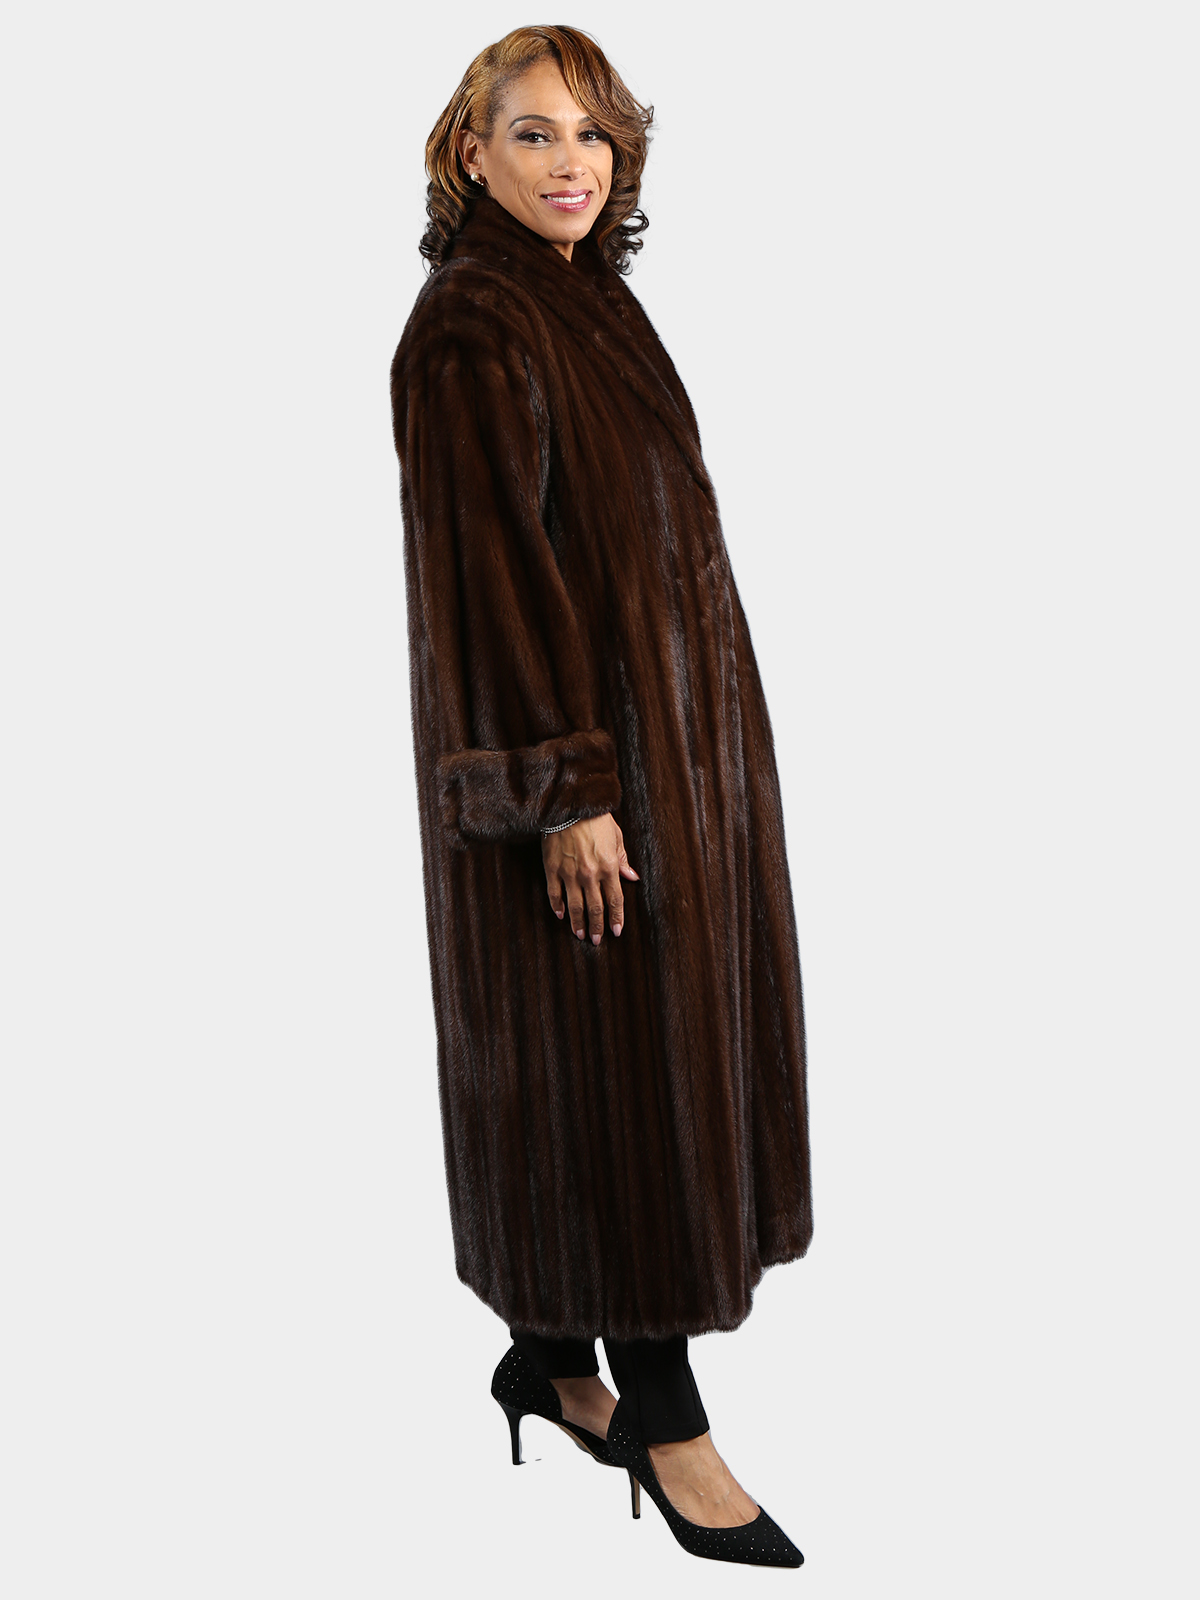 Woman's Neiman Marcus Mahogany Female Mink Fur Coat - Estate Furs